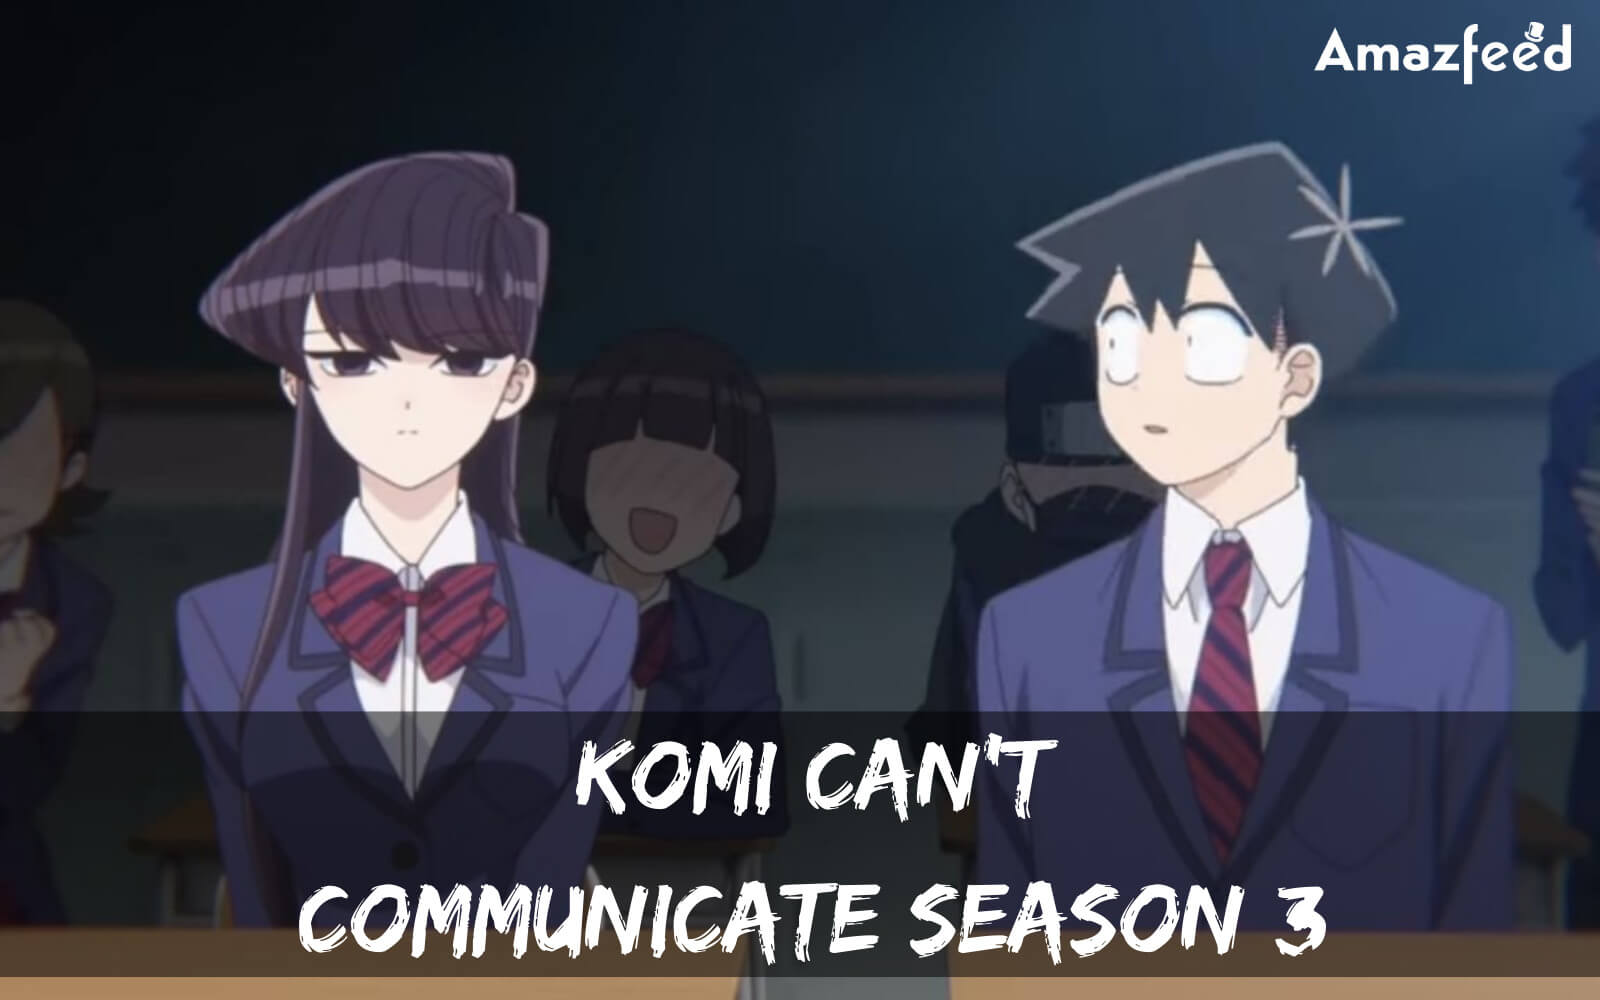 Komi can’t communicate season 3 trailer